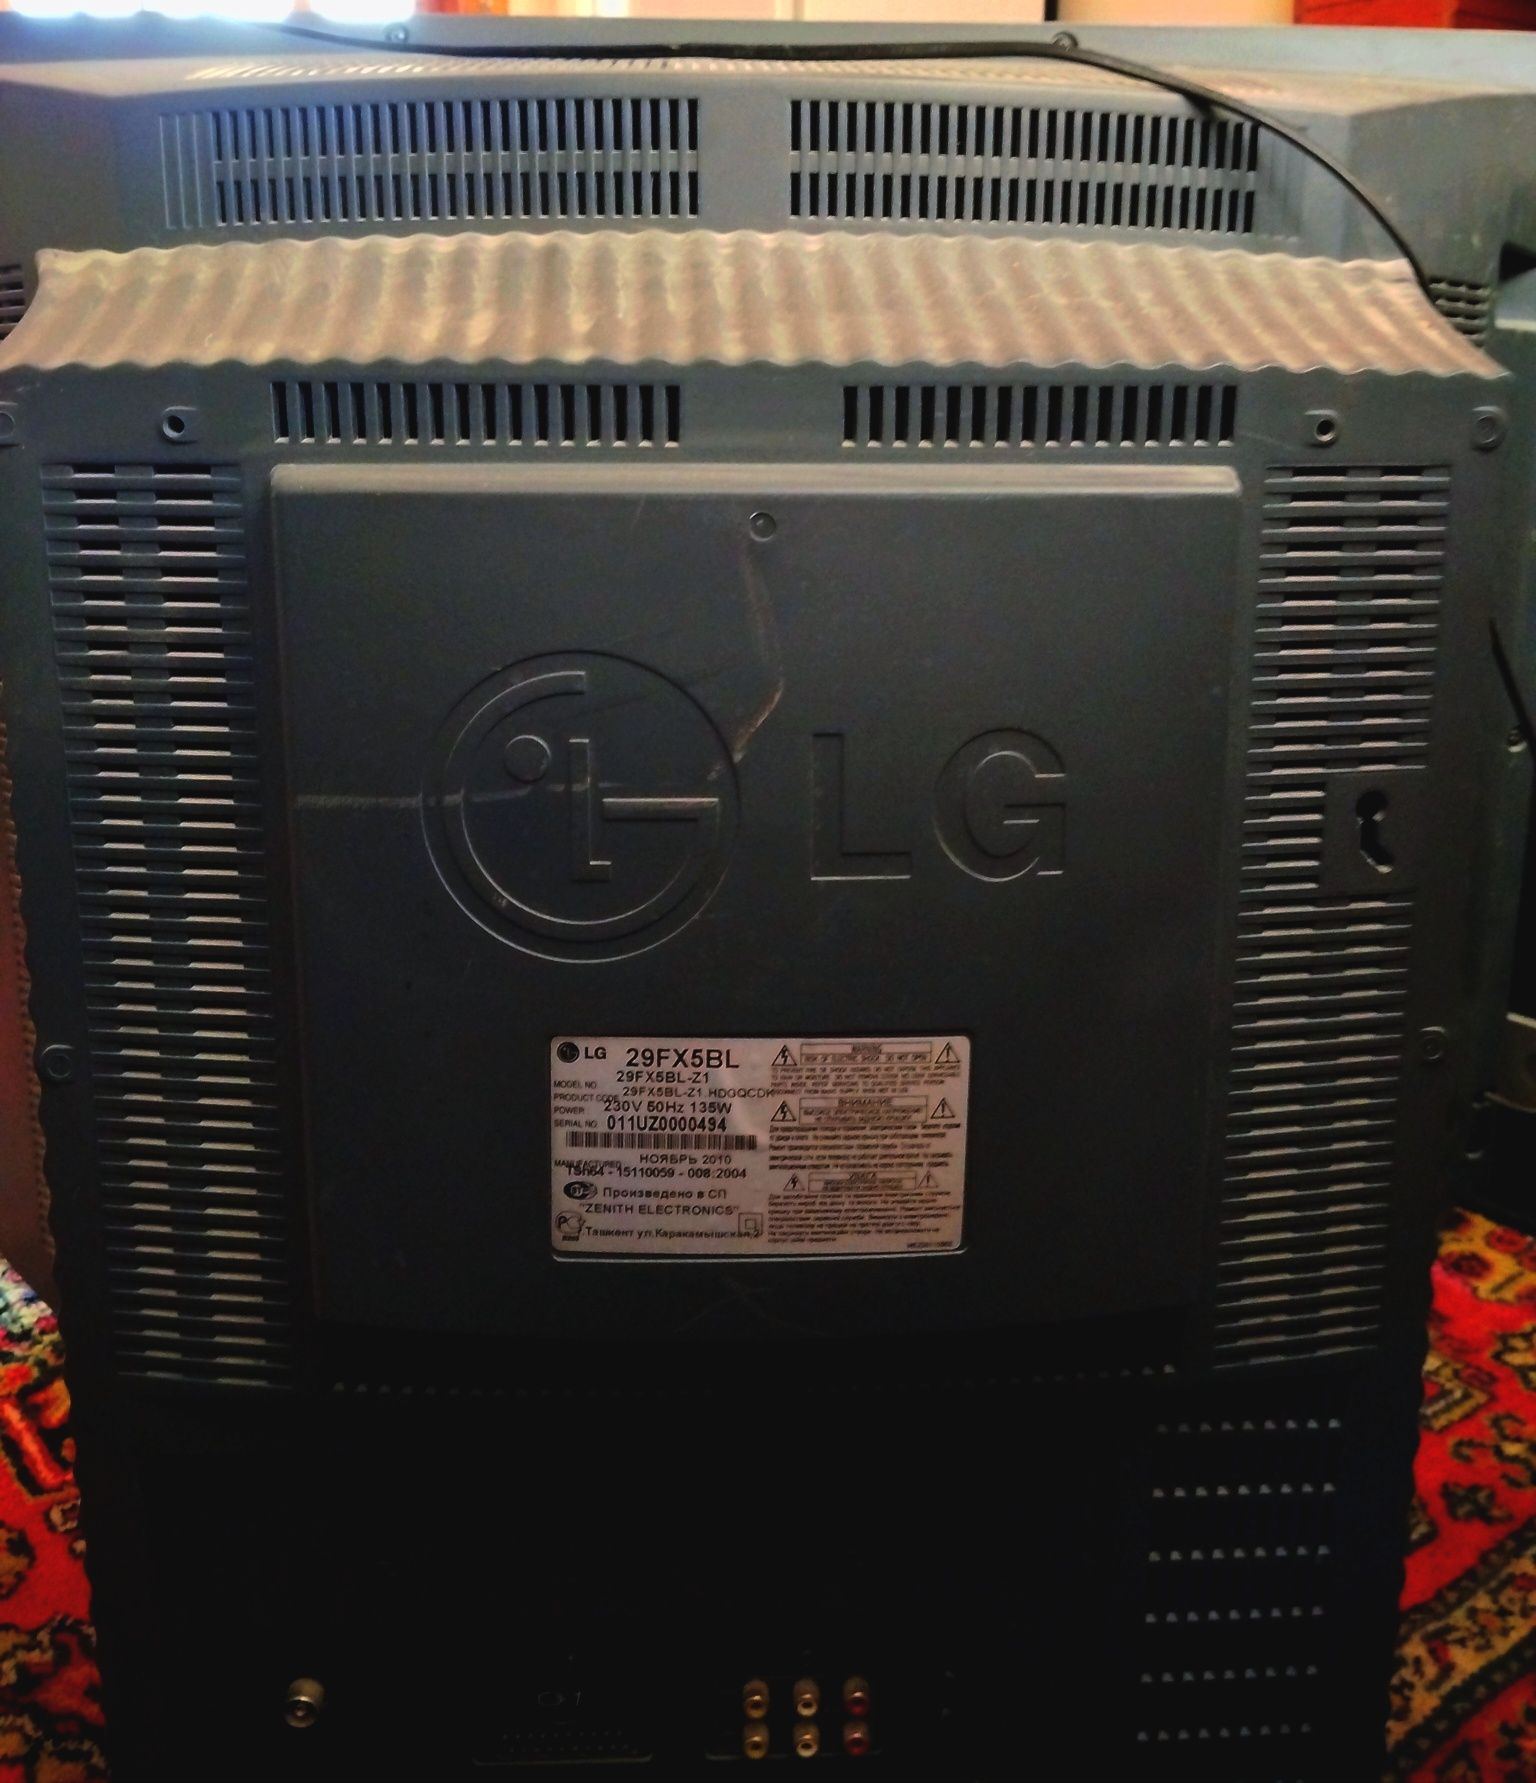 LG televizor eski